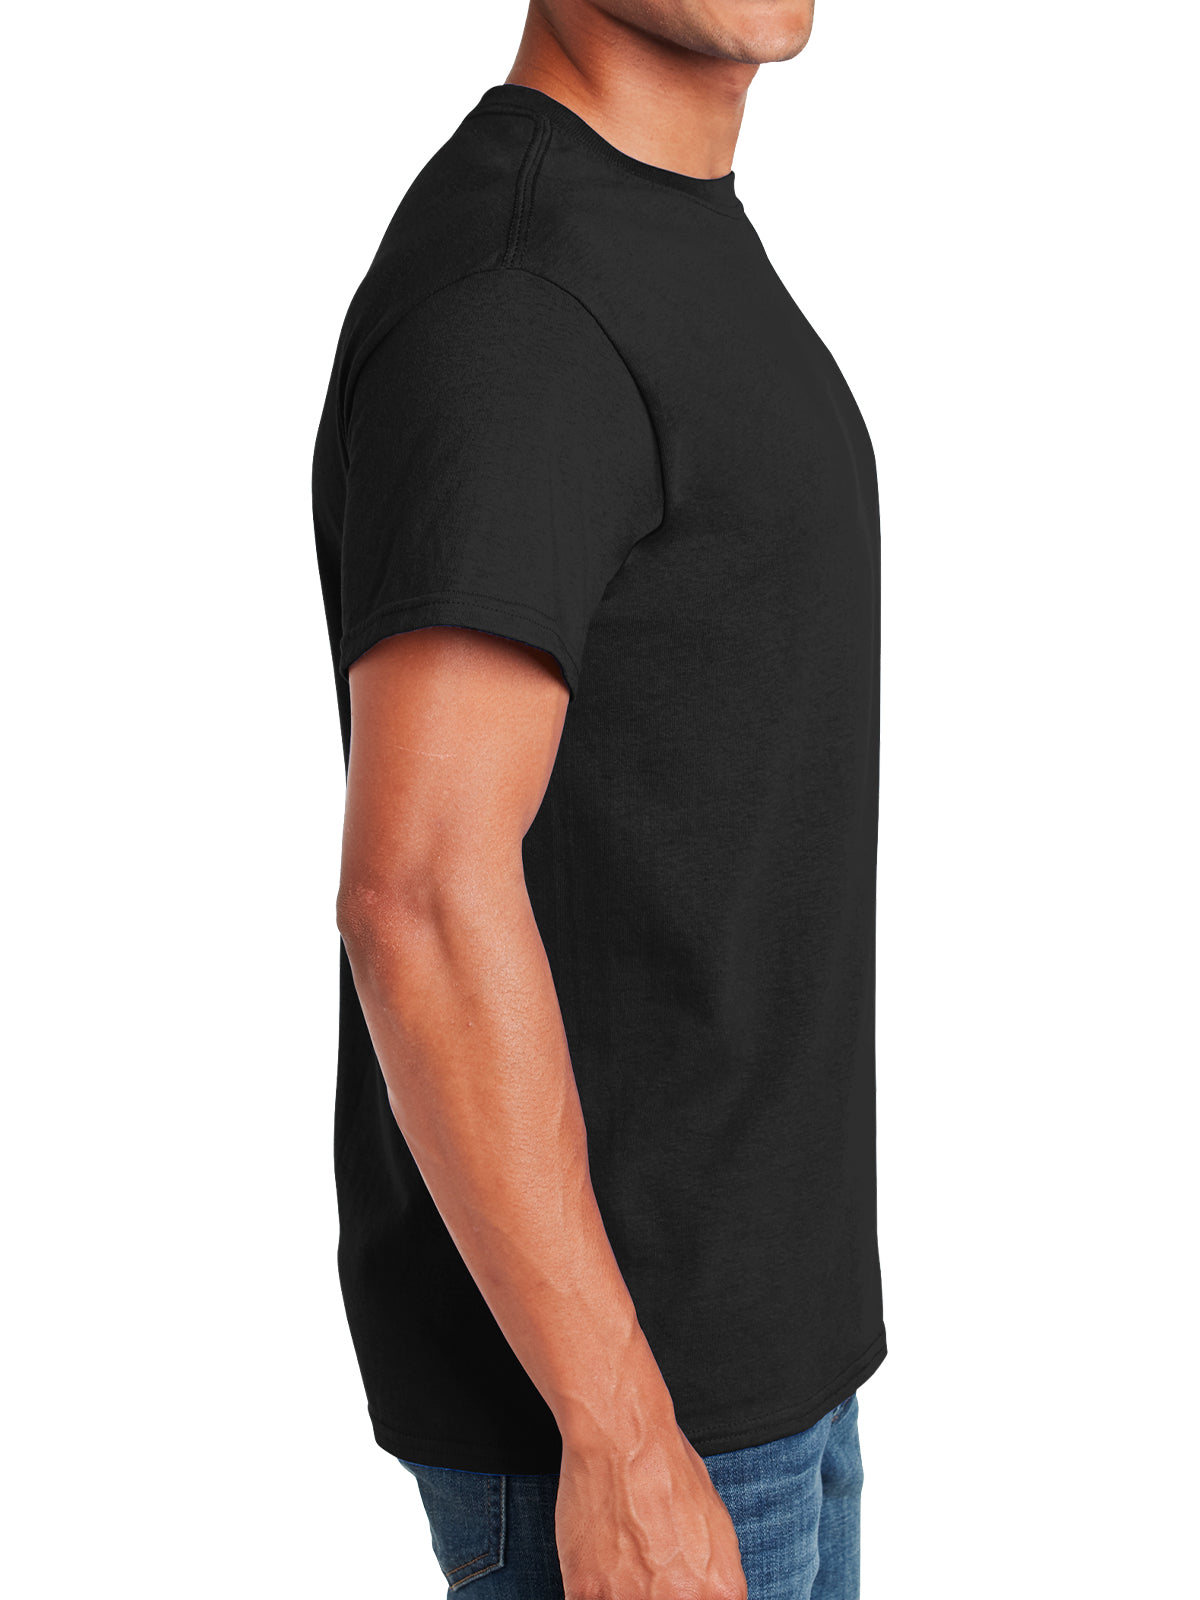 Men's Softstyle T-Shirt - 64000 - Black